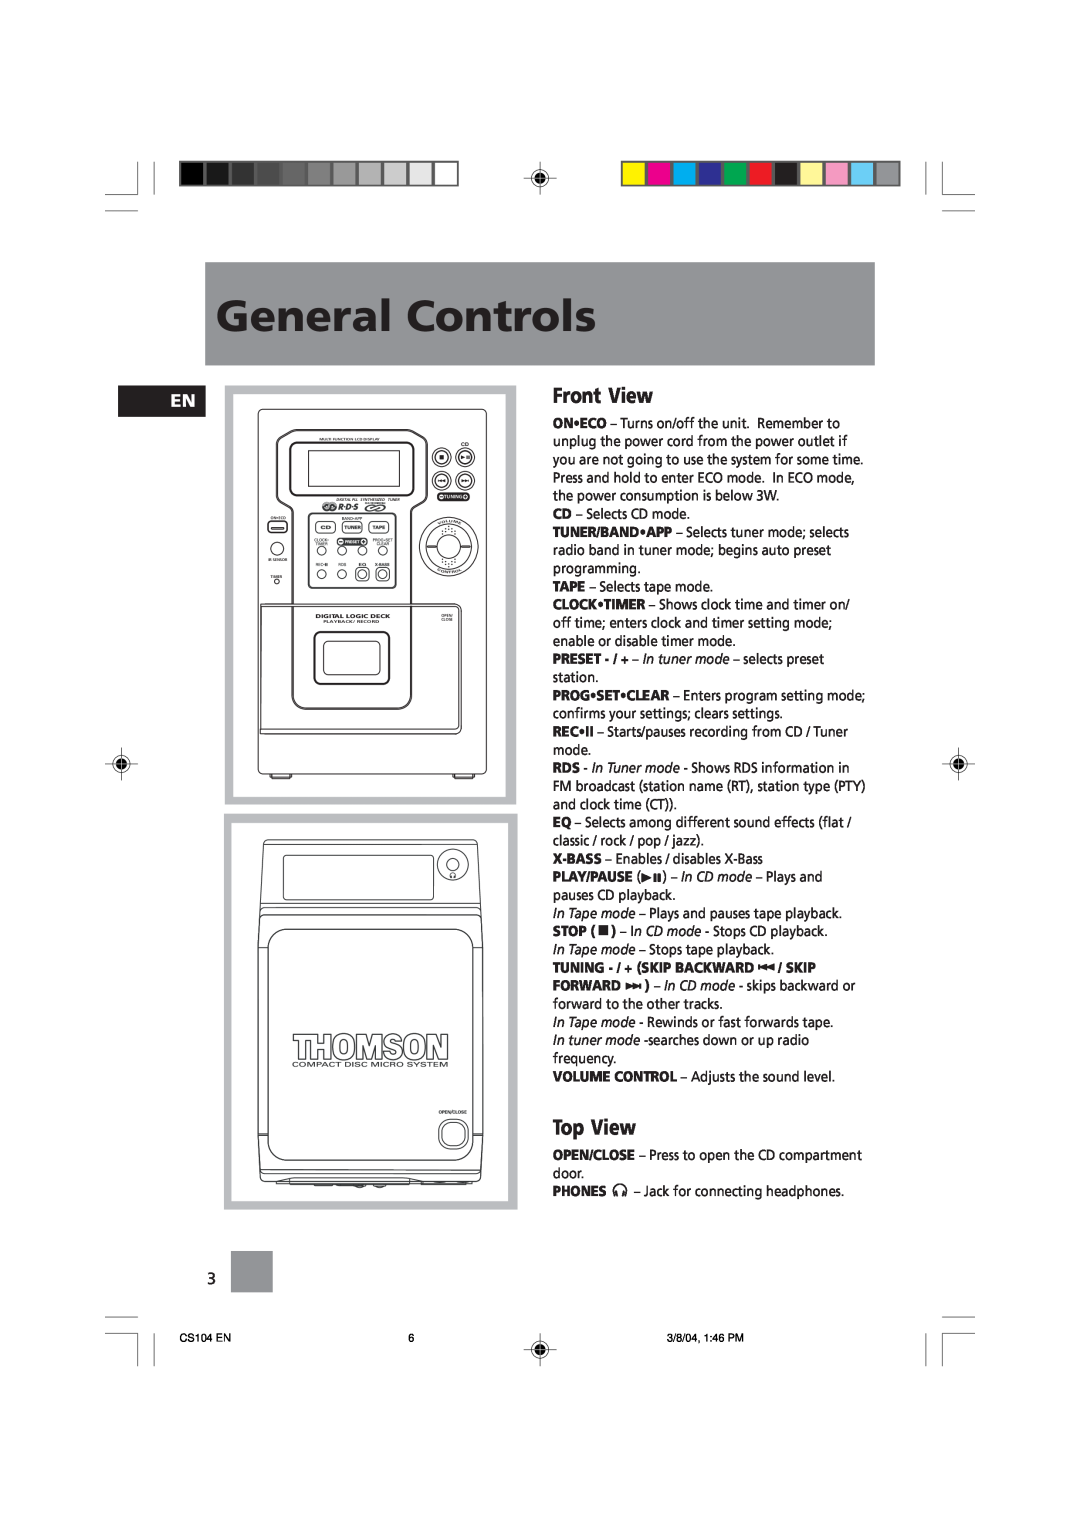 Technicolor - Thomson General Controls, CS104 EN, Tuning, Digital Logic Deck, Digital Pll Synthesized Tuner, Oneco 